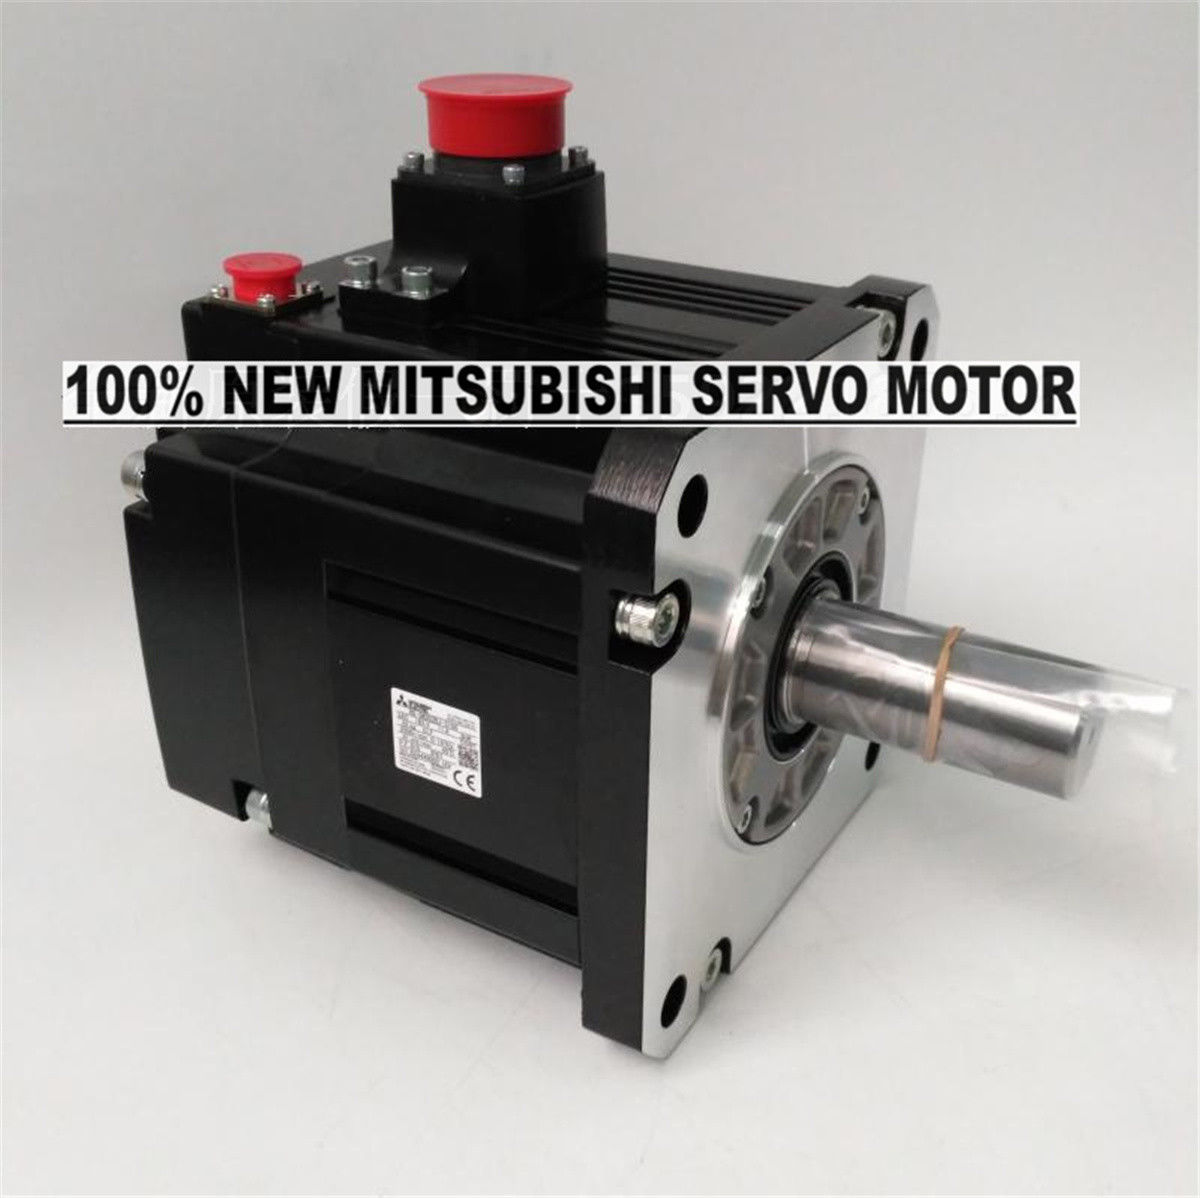 NEW Mitsubishi Servo Motor 300W HG-SN302BJ-S100 in box HGSN302BJS100 - Click Image to Close